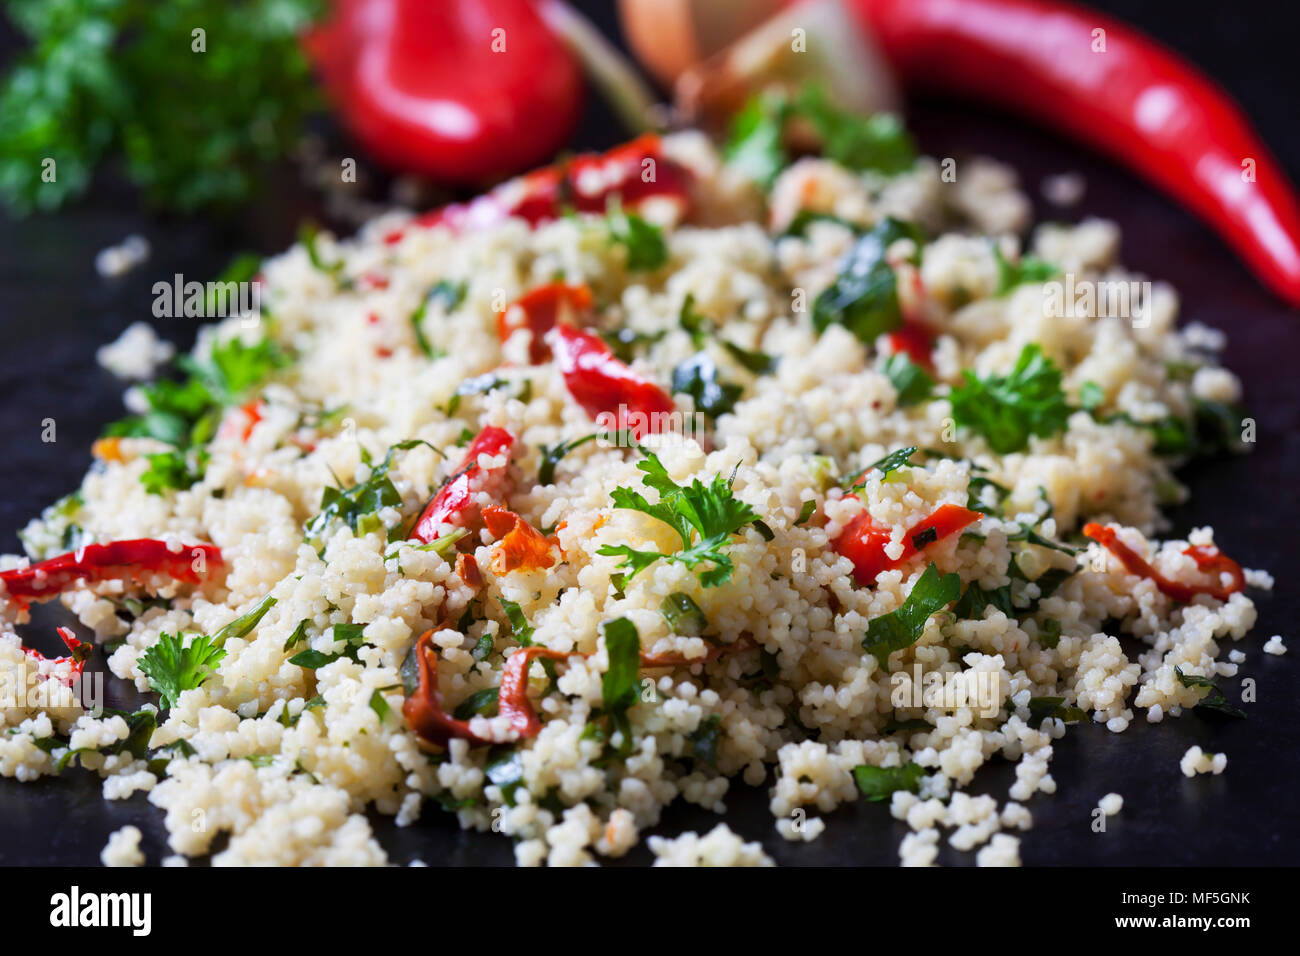 Couscous salad, close-up Stock Photo